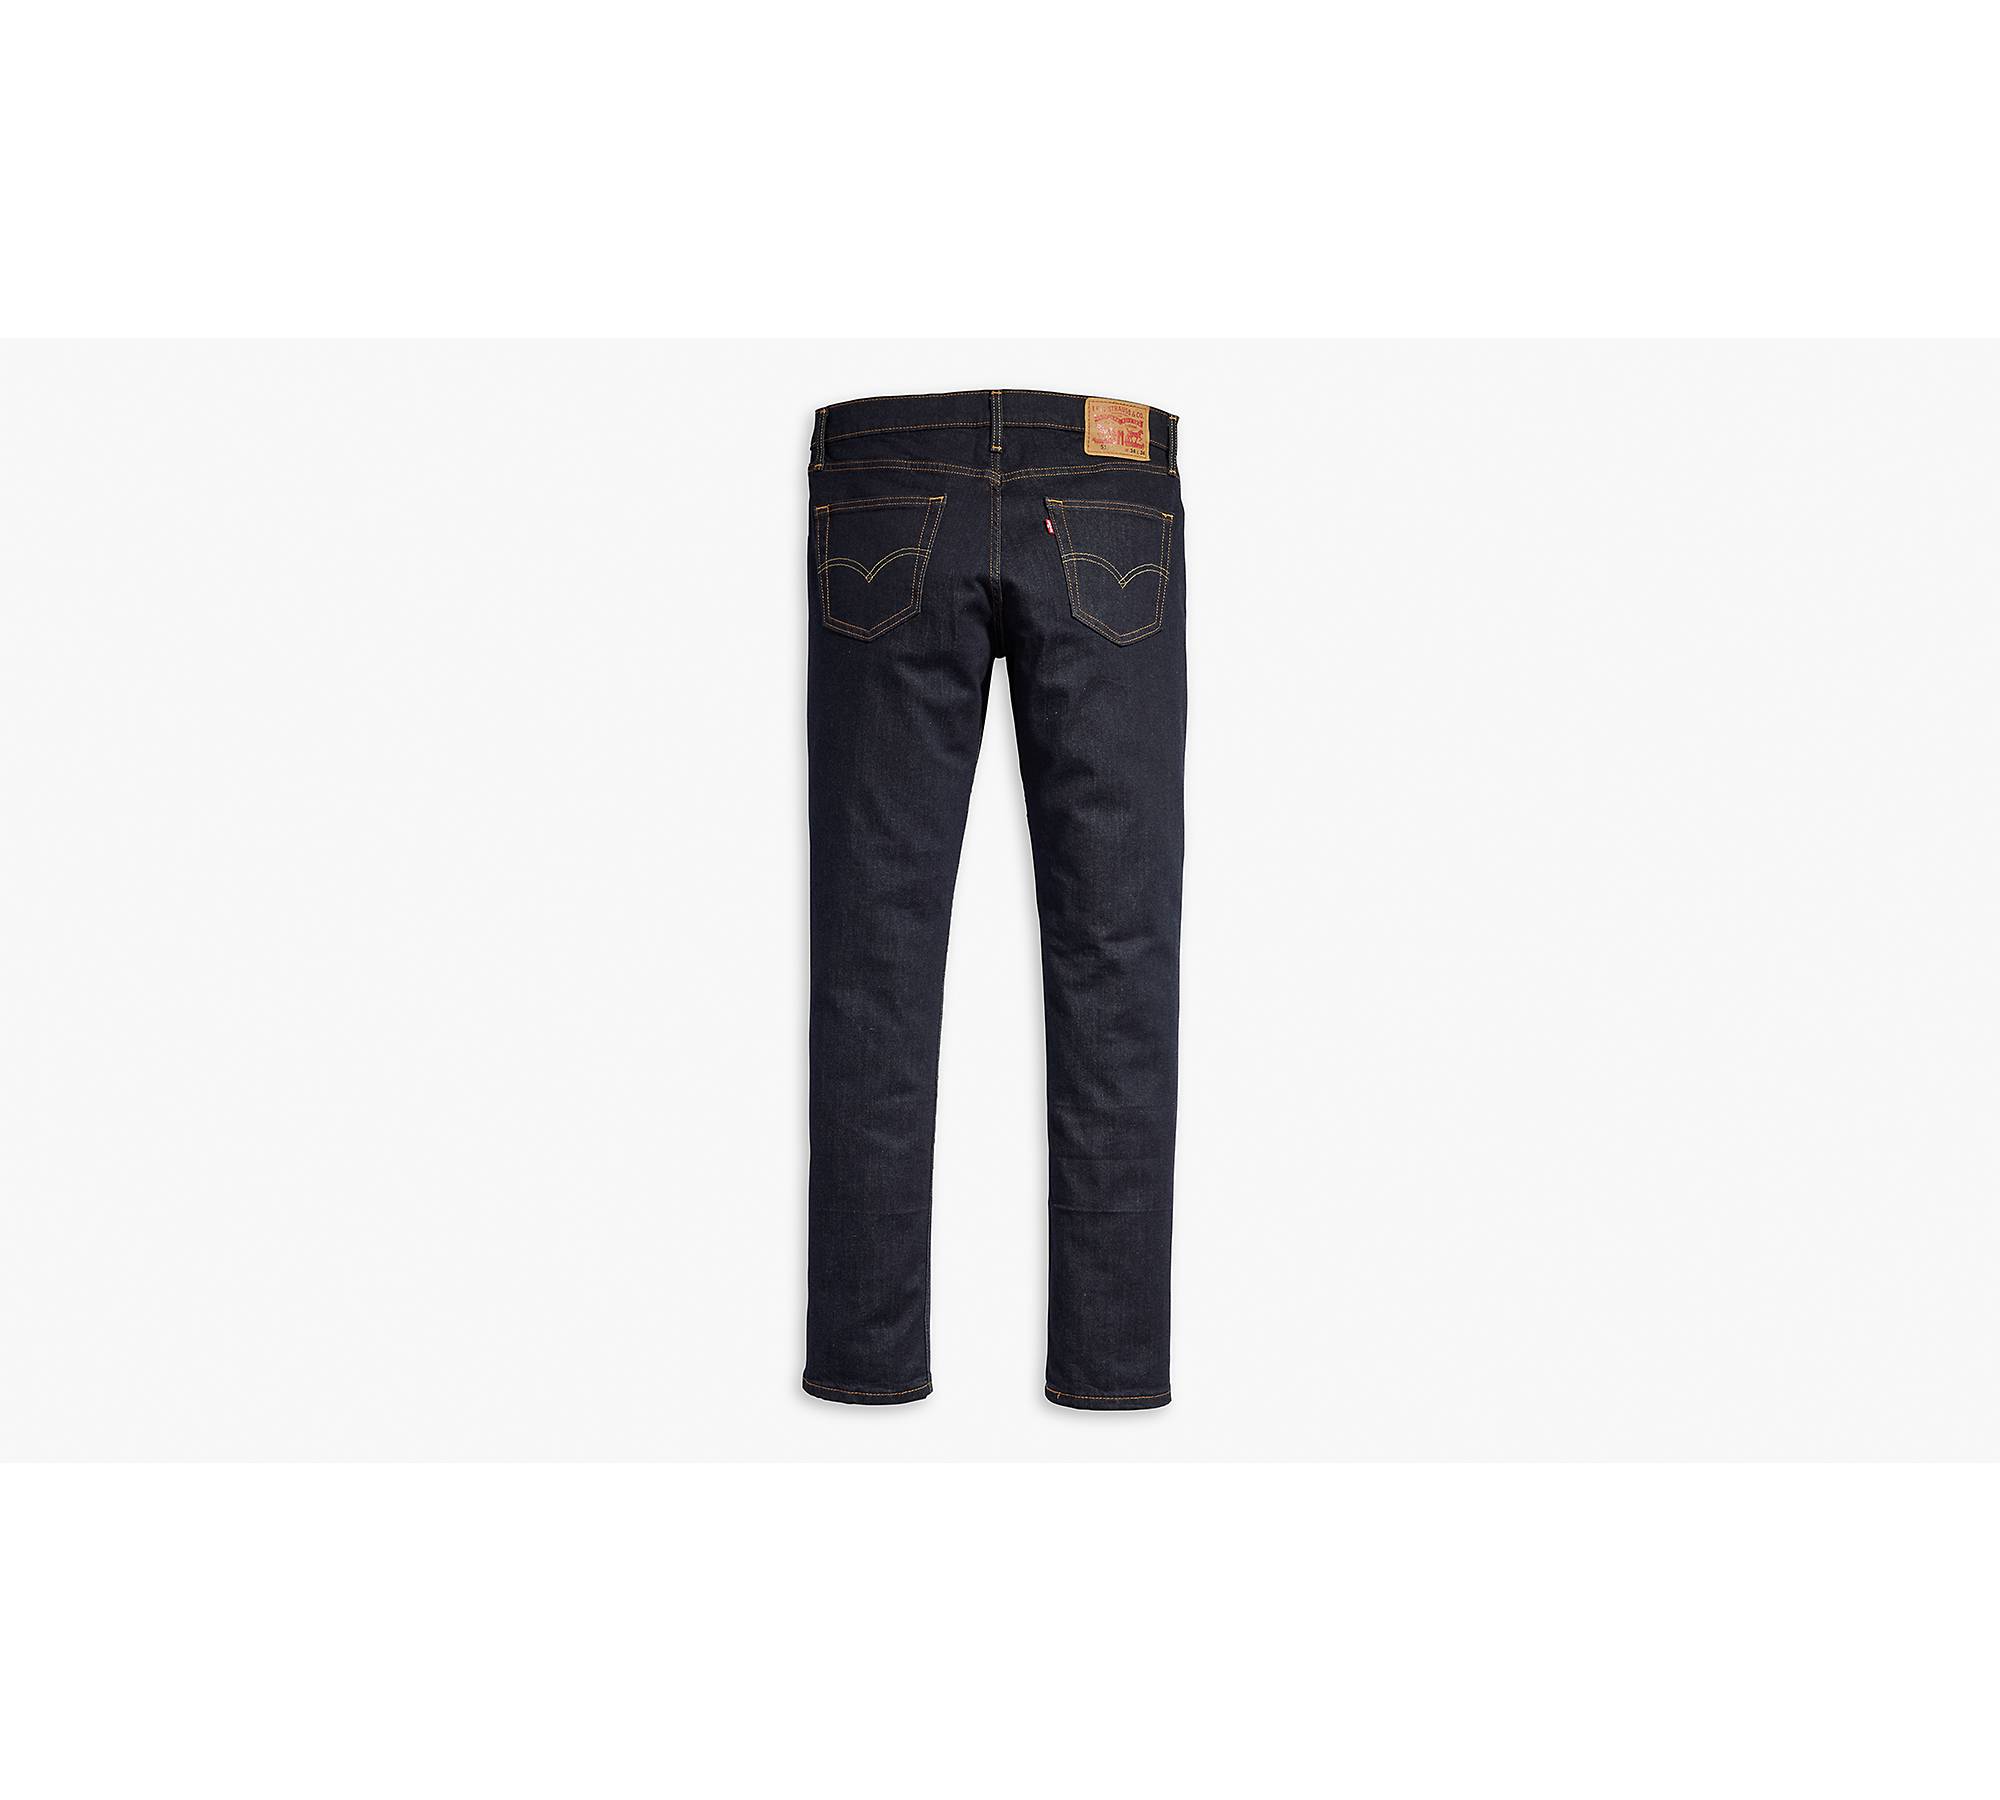 Buy Boys Slim Fit Cotton Jeans , Dark Blue Pants Online at 65% OFF